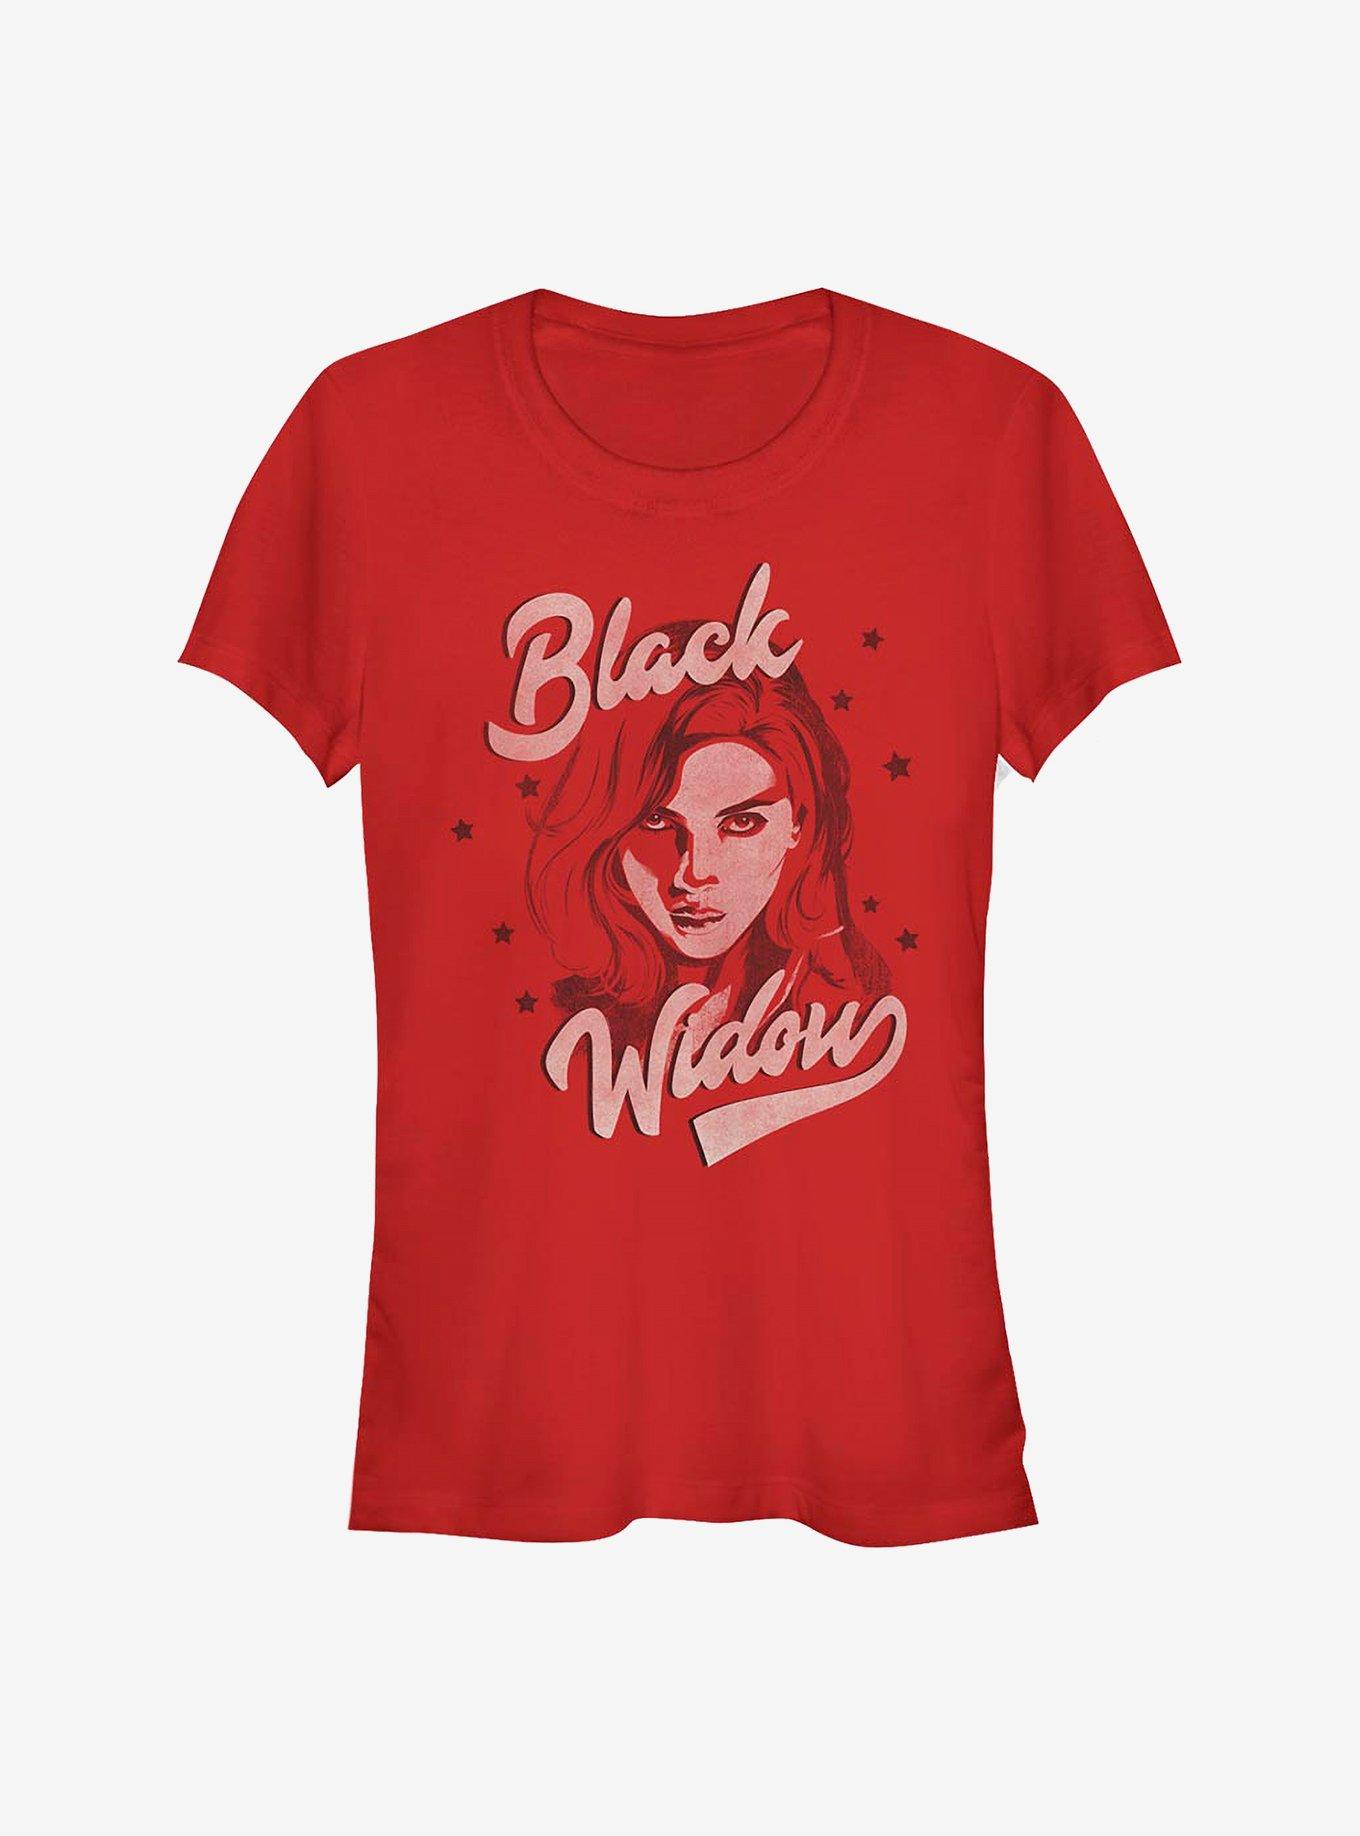 Marvel Black Widow Portrait Girls T-Shirt